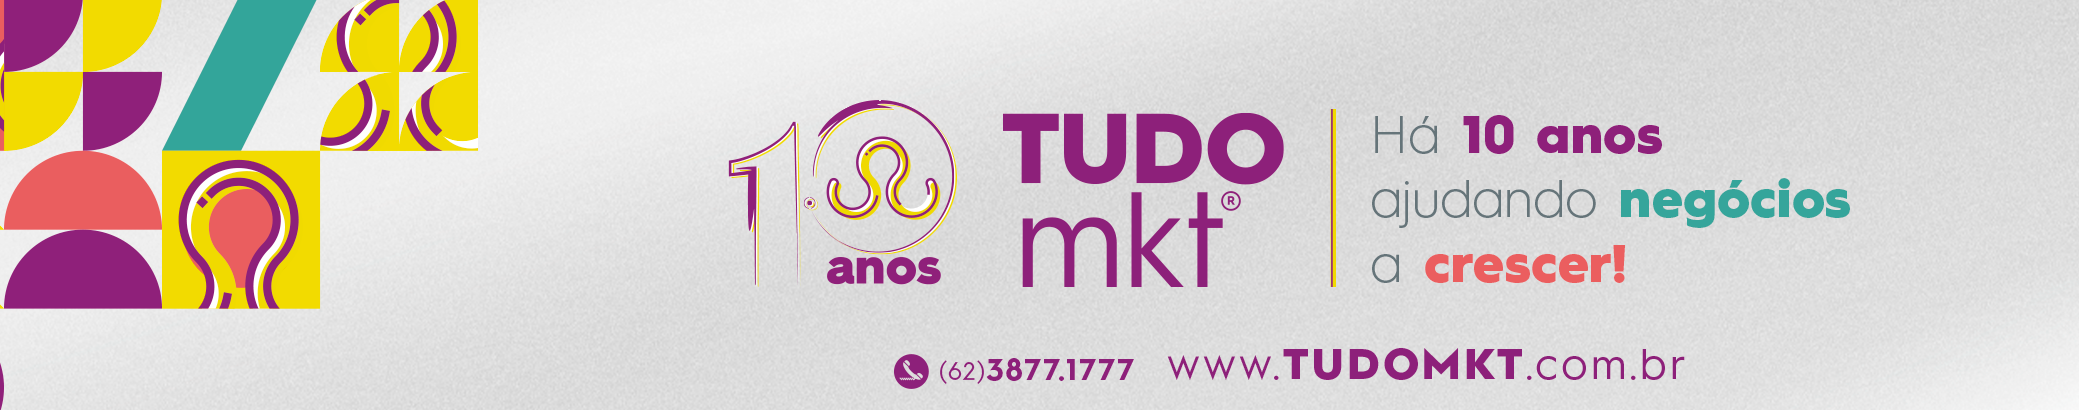 Tudo MKT's profile banner